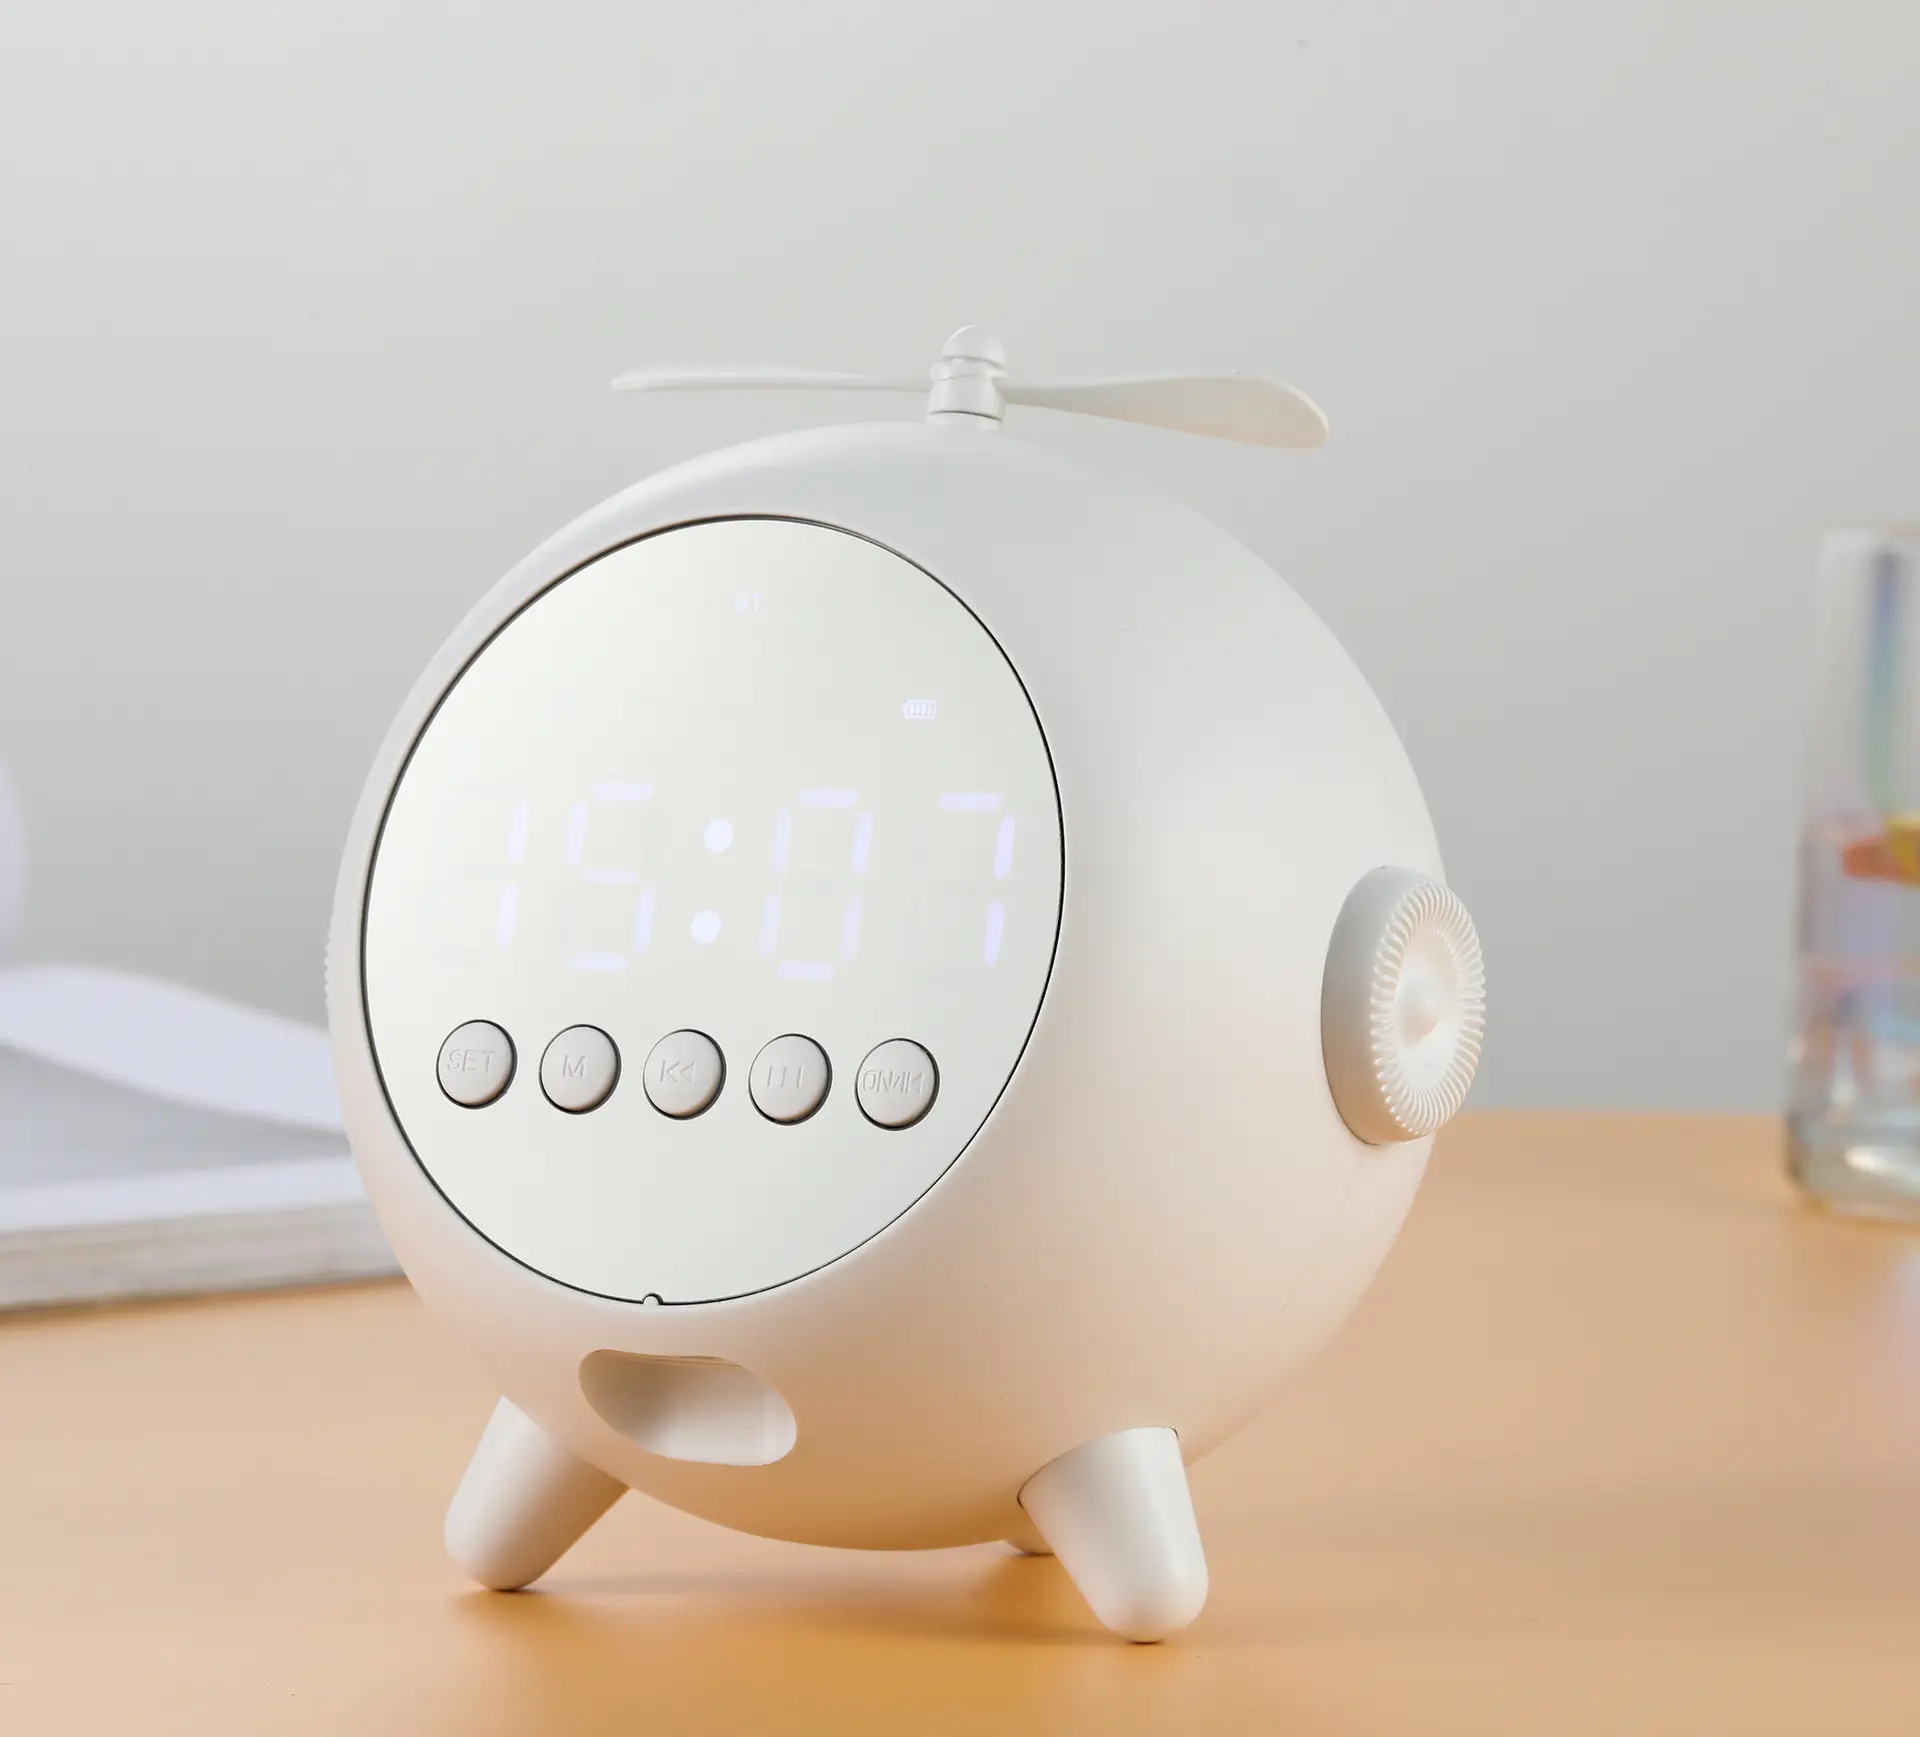 Hot Selling XM18 WTS BT Speakers LED Digital Display Water Proof Wireless Alarm Clock Speaker Portable Smart Stereo Speakers